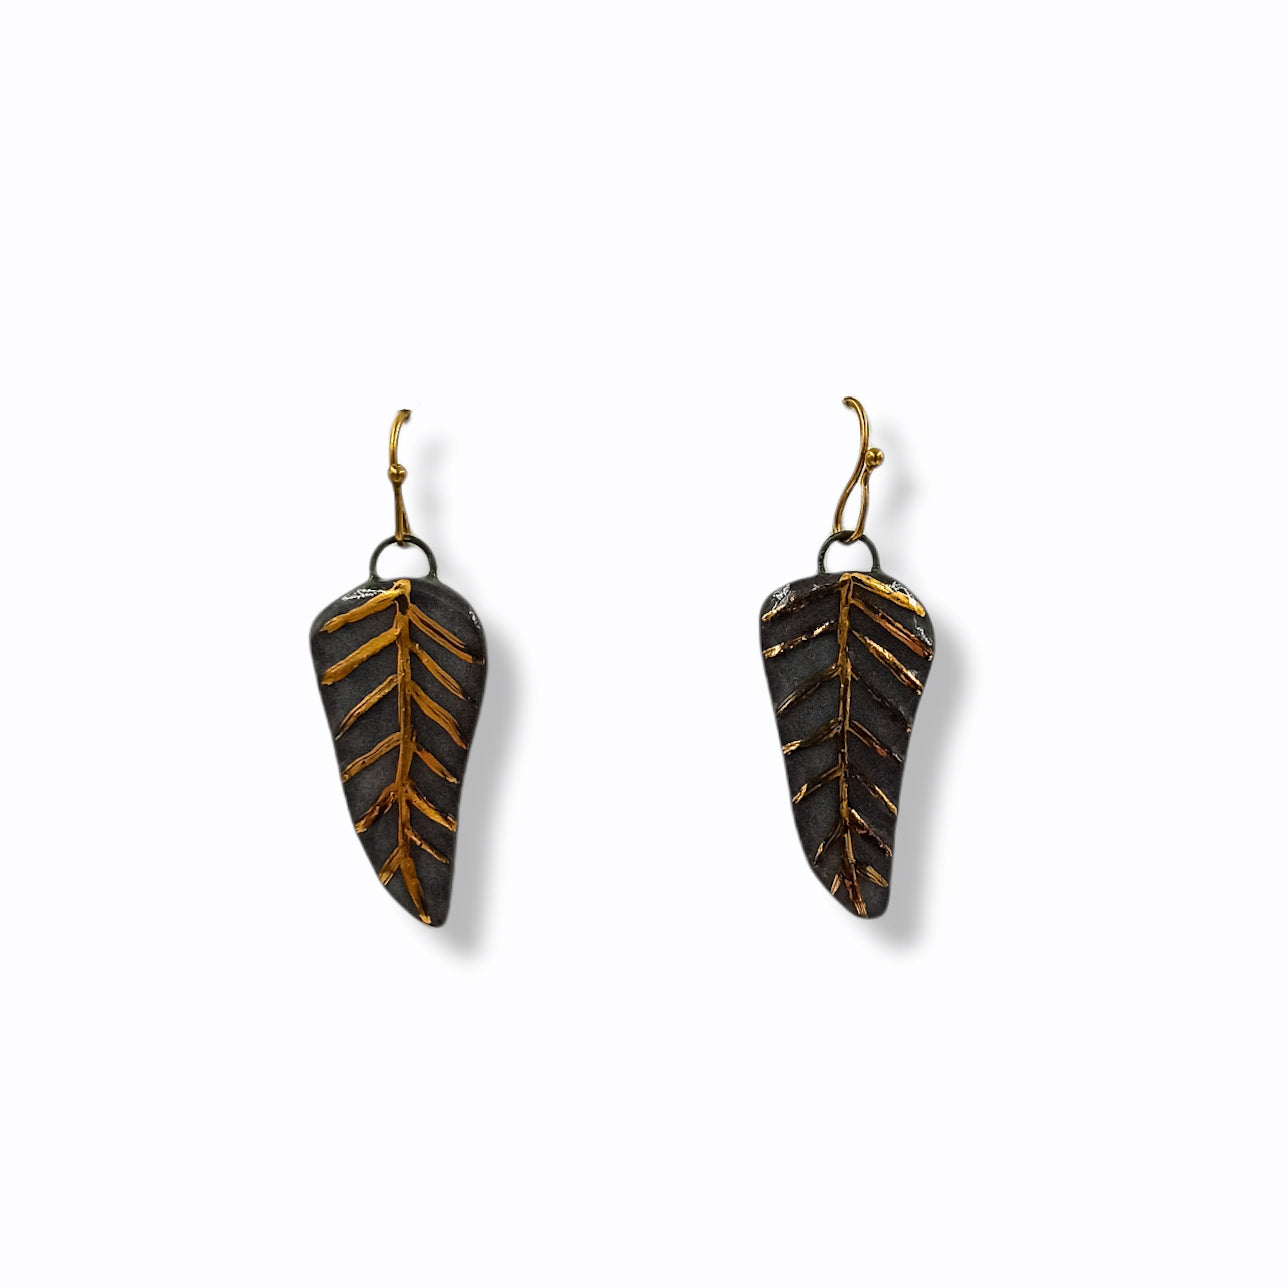 Handmade Dangle Earrings "Leaf"